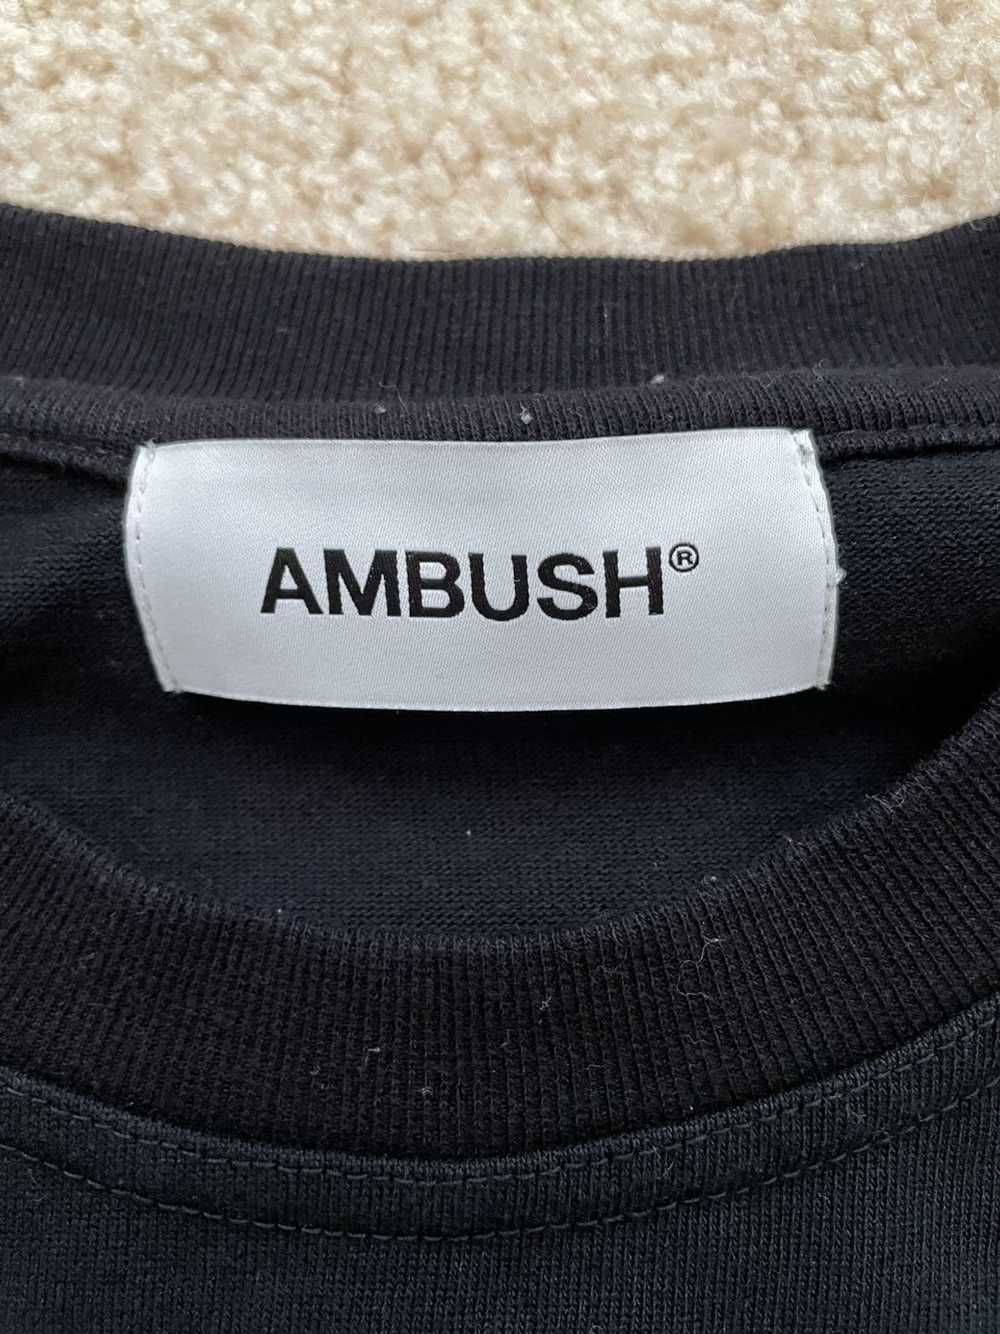 Ambush Design Ambush Amazon Long sleeve tee - image 4